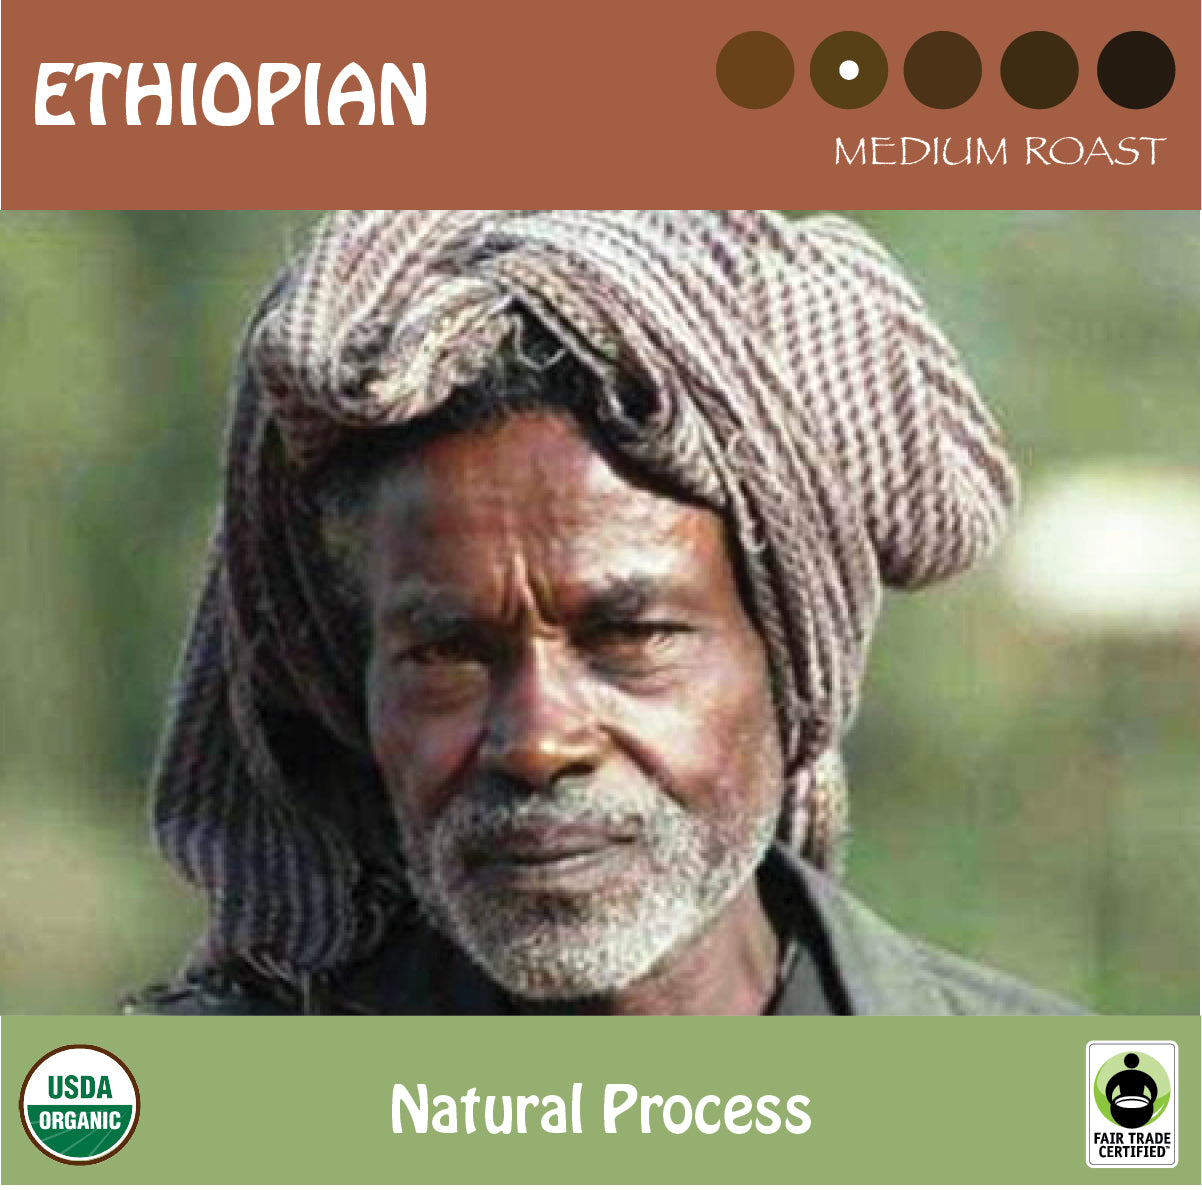 An Ethiopian coffee farmer. Signature's medium roast Natural Process coffee from Ethiopia. USDA organic and Fair Trade-certified logos.